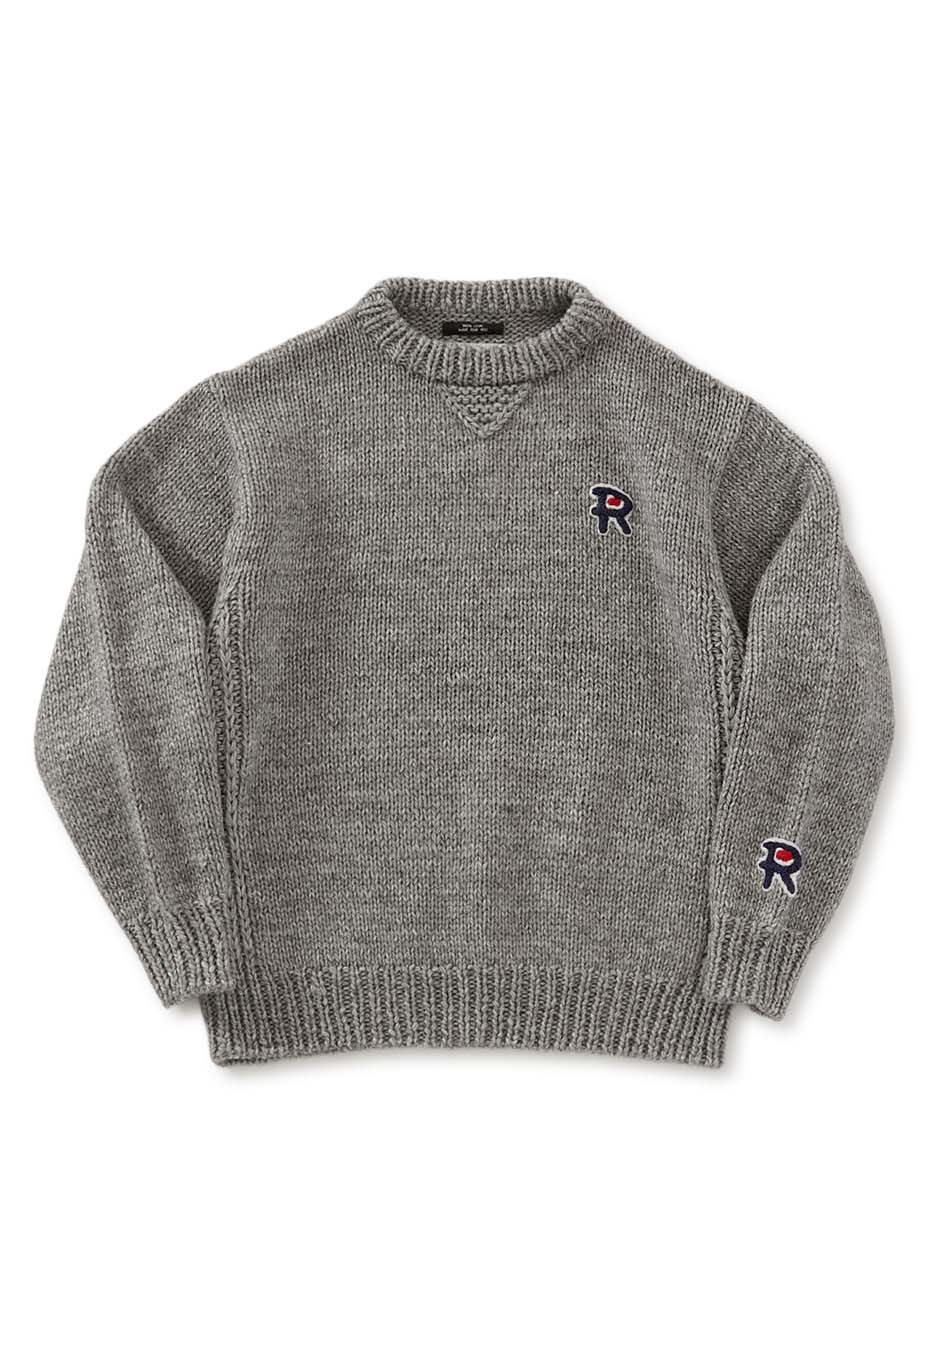 RICE NINE TEN hand knit plain sweater